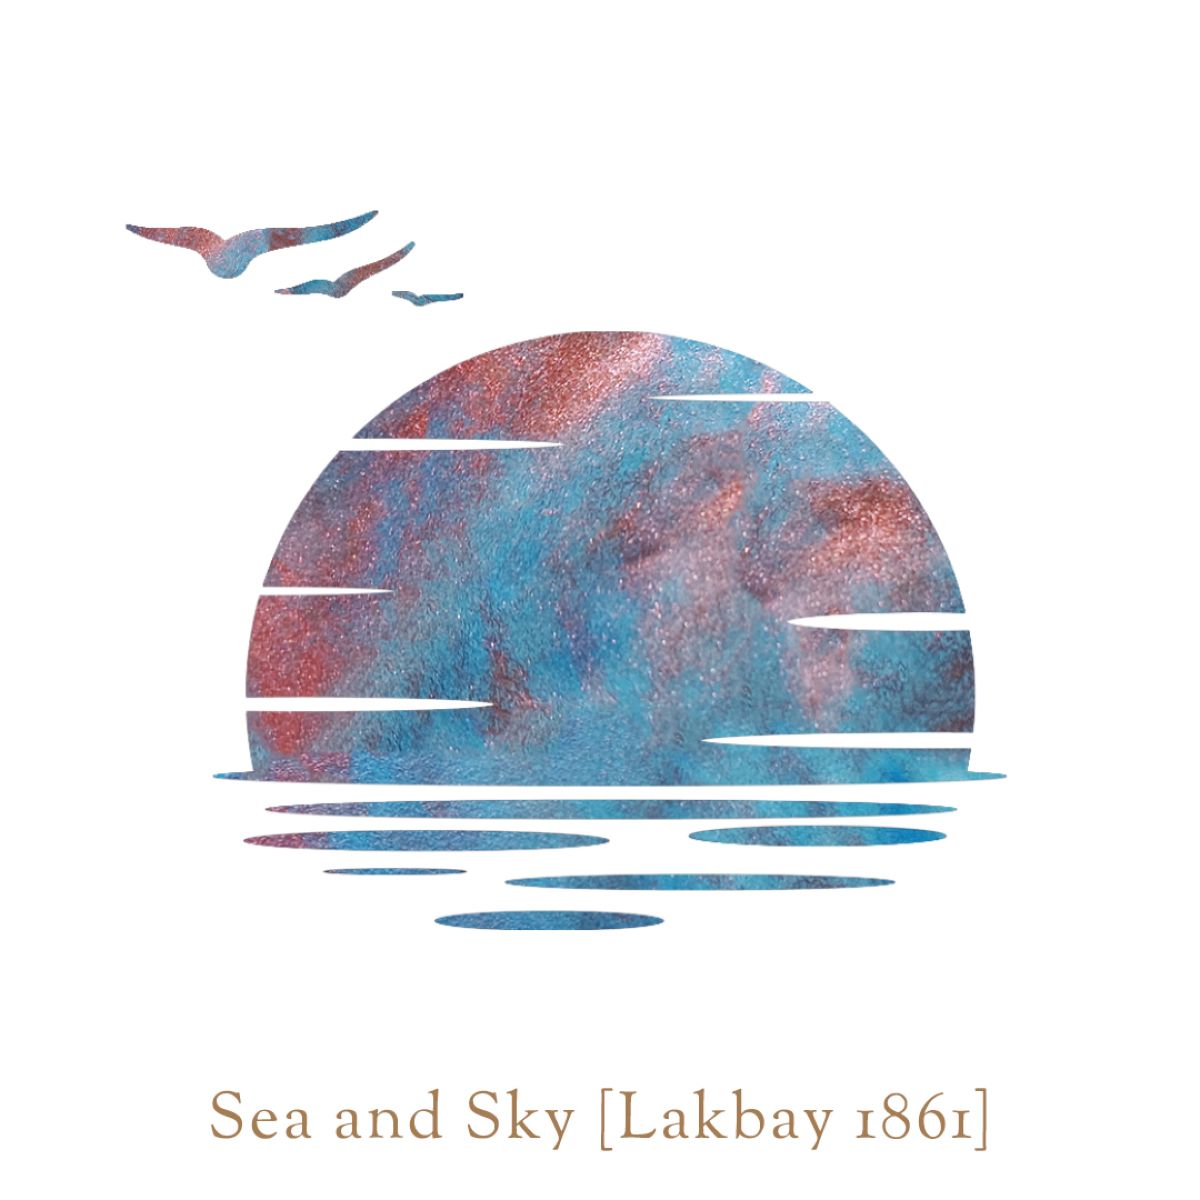 Vinta Inks - Sea and Sky (Lakbay 1861)